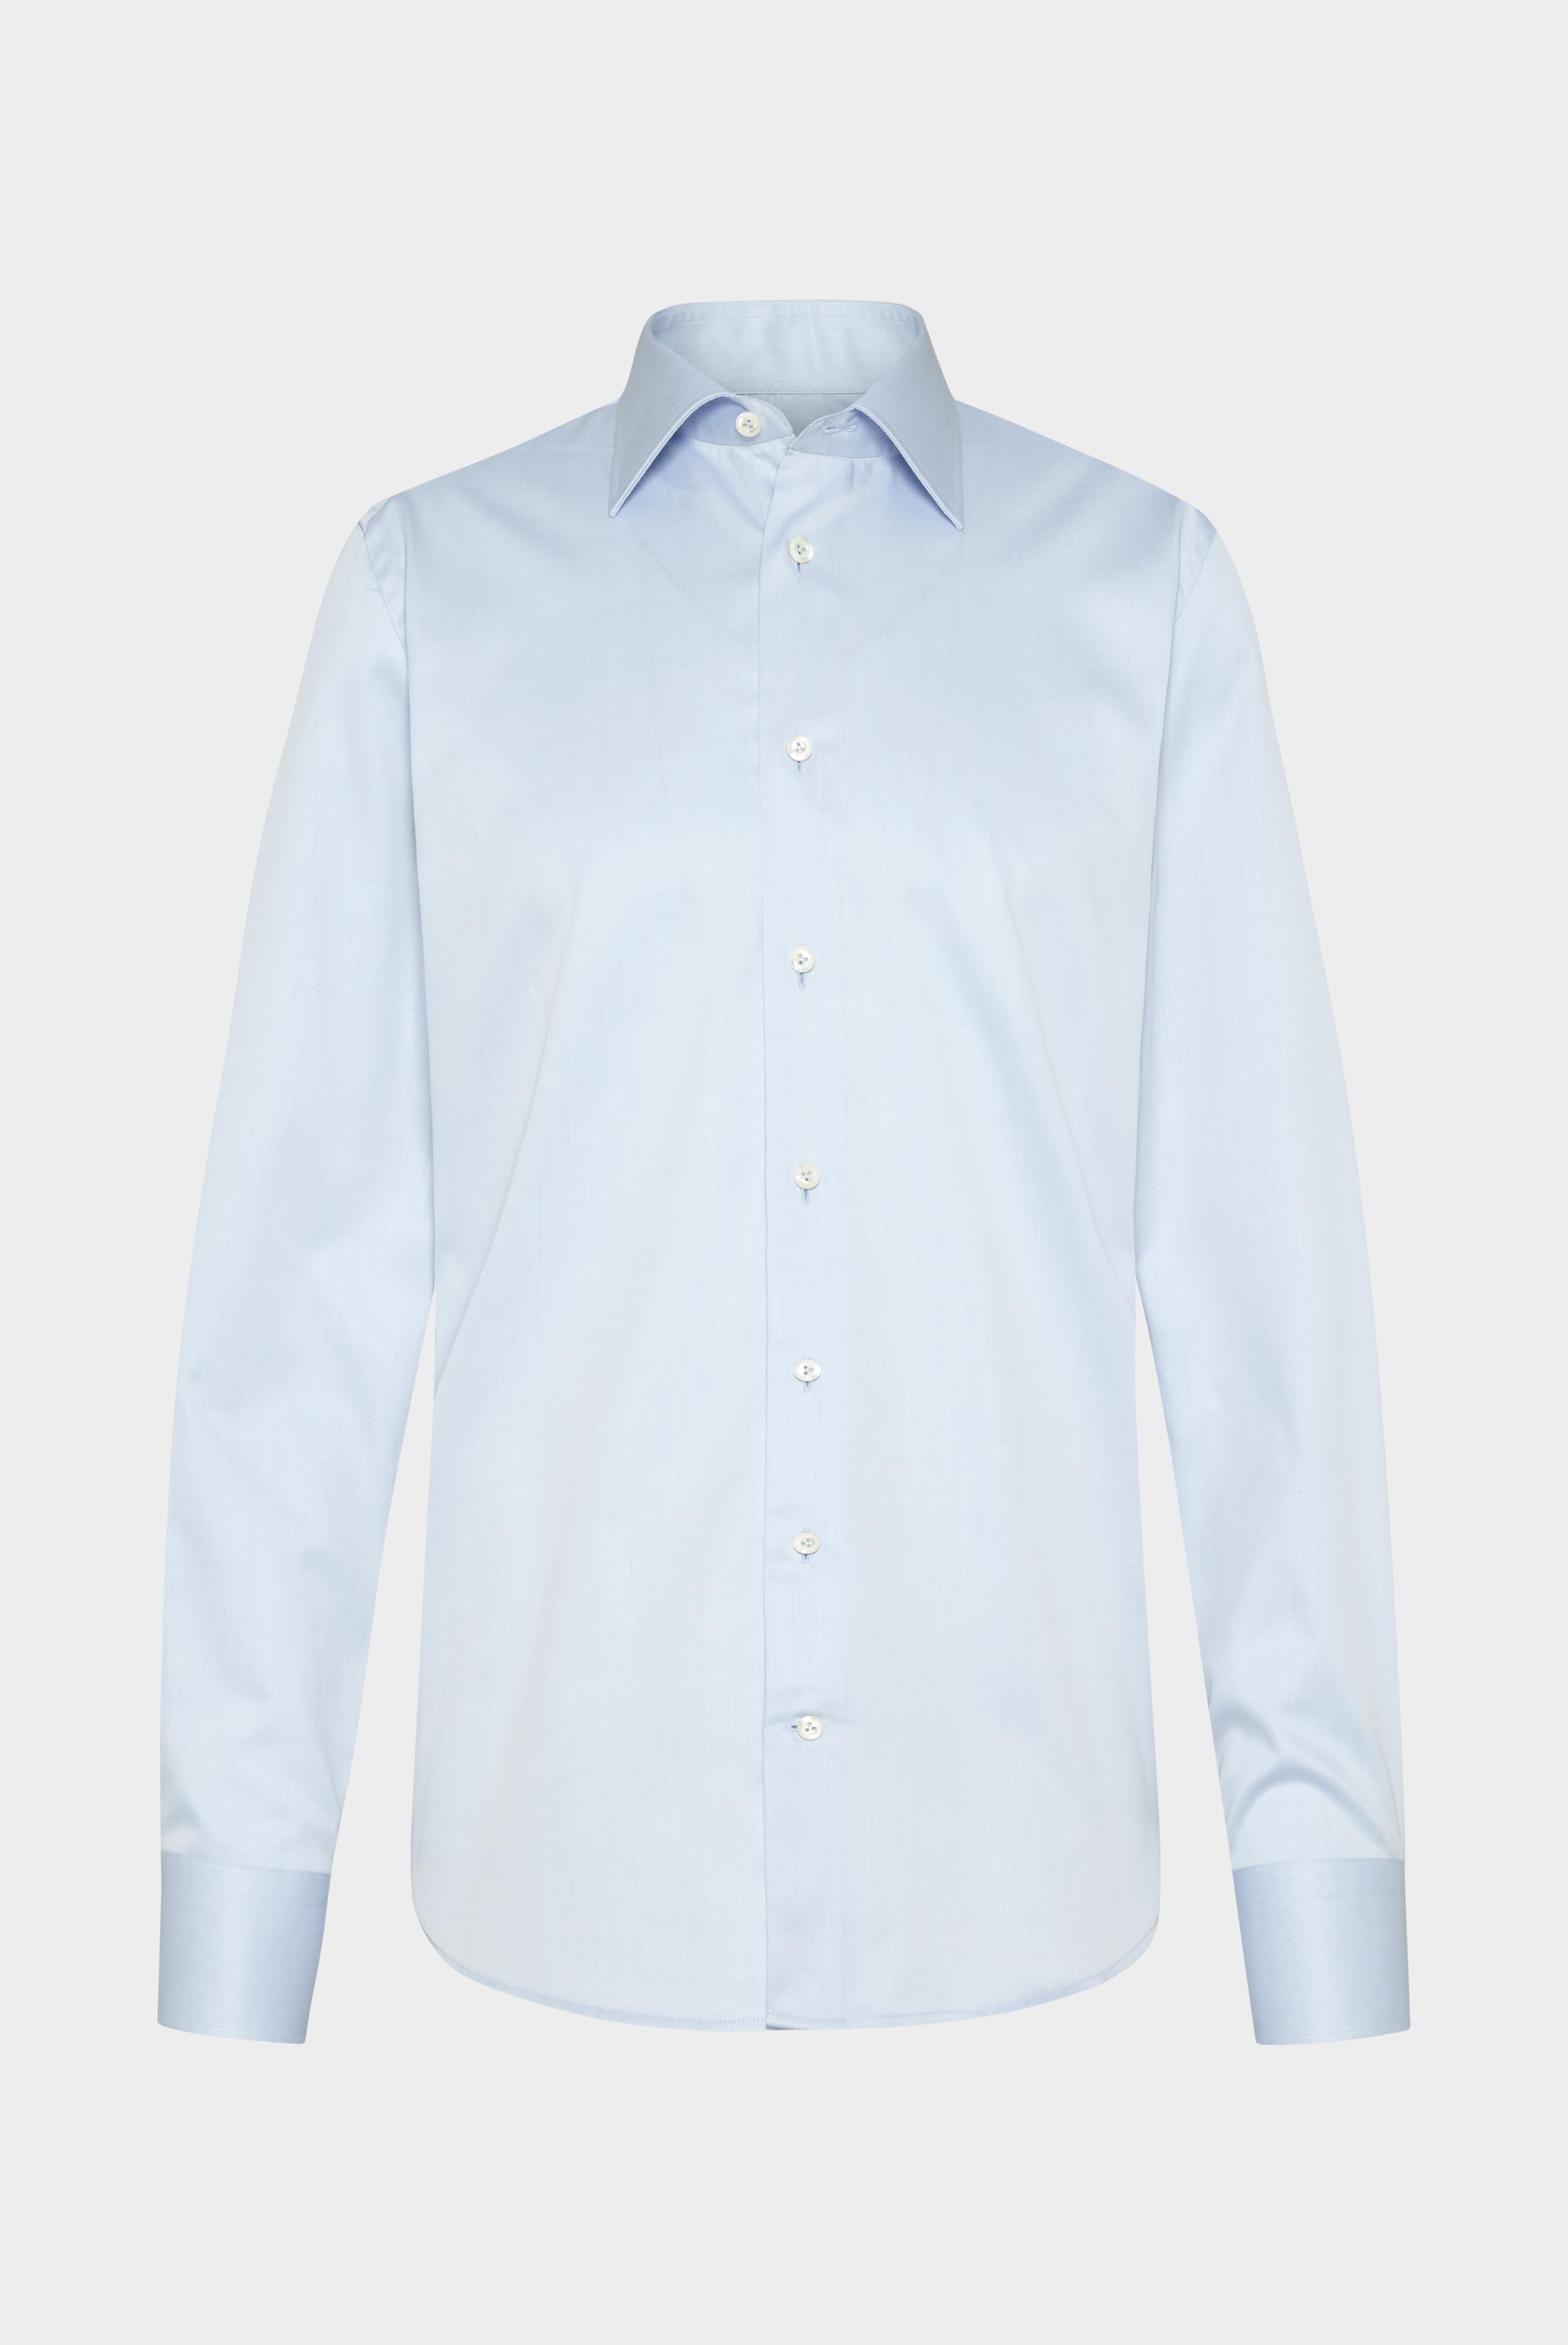 Easy Iron Shirts+Wrinkle Free Twill Shirt Comfort Fit+20.2046.BQ.132241.720.38